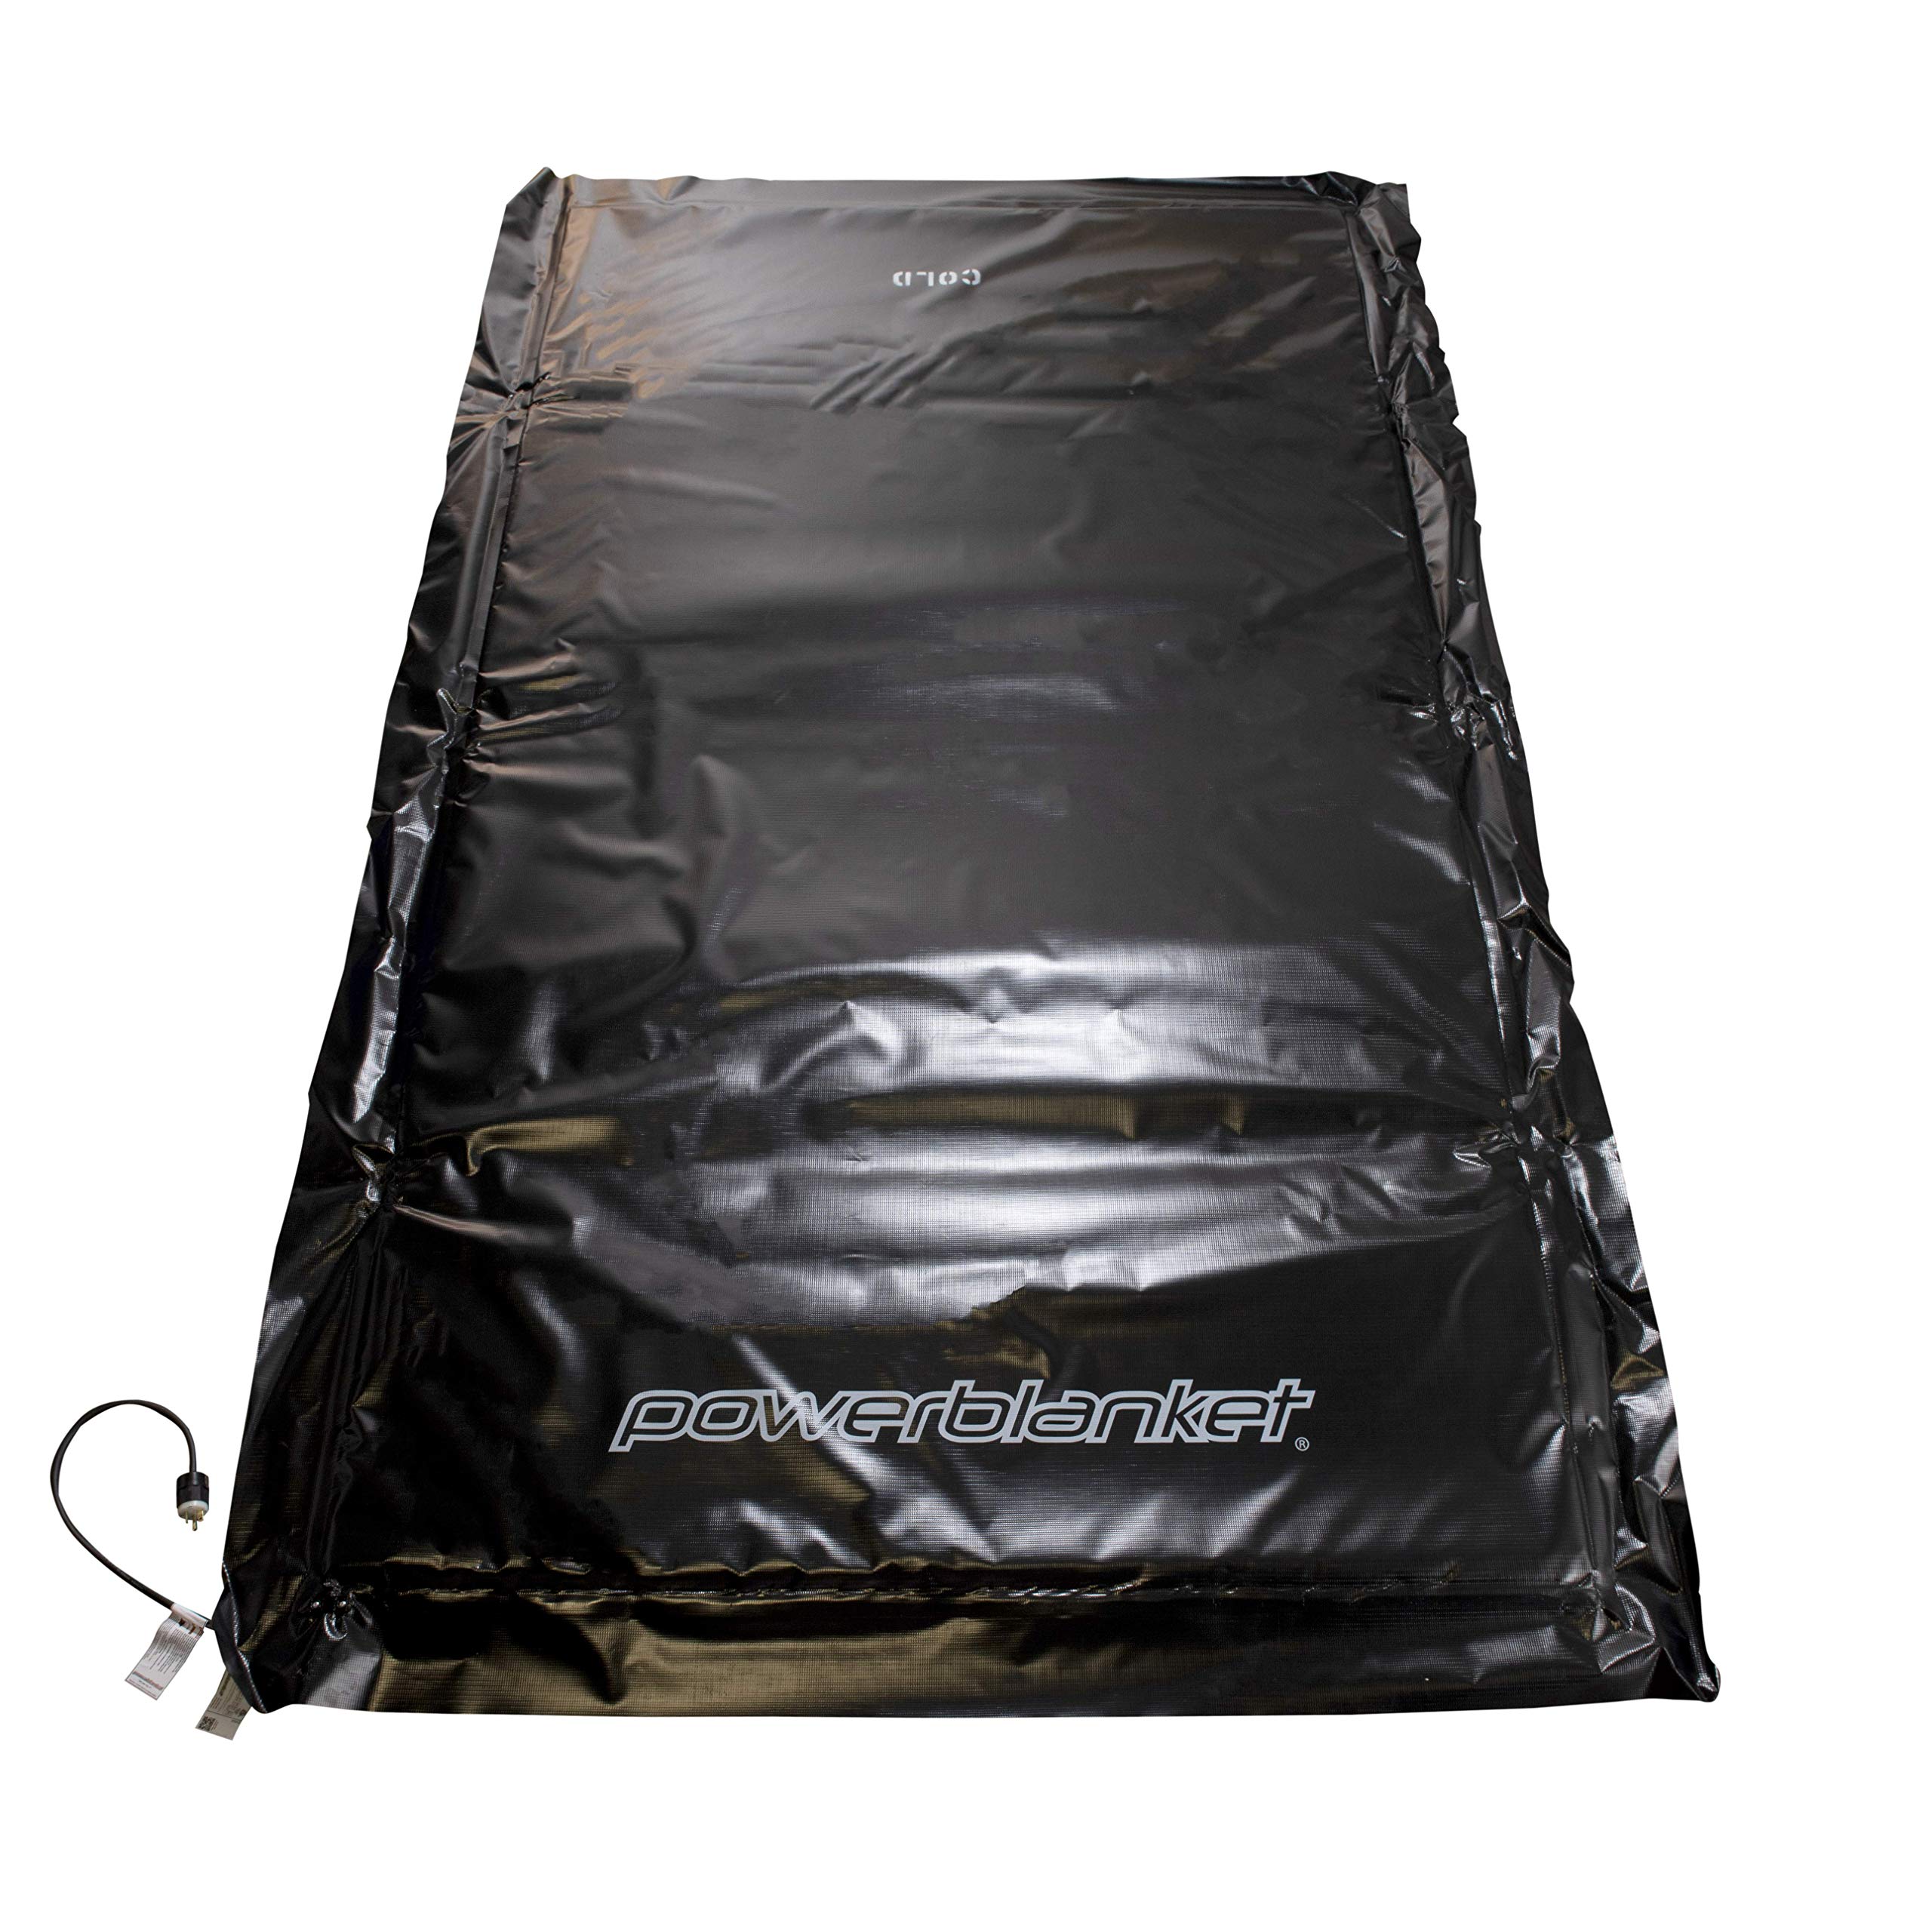 Powerblanket MD0304 加热混凝土毯 - 3' x 4' 加热尺寸 - 4' x 5' 成品尺寸